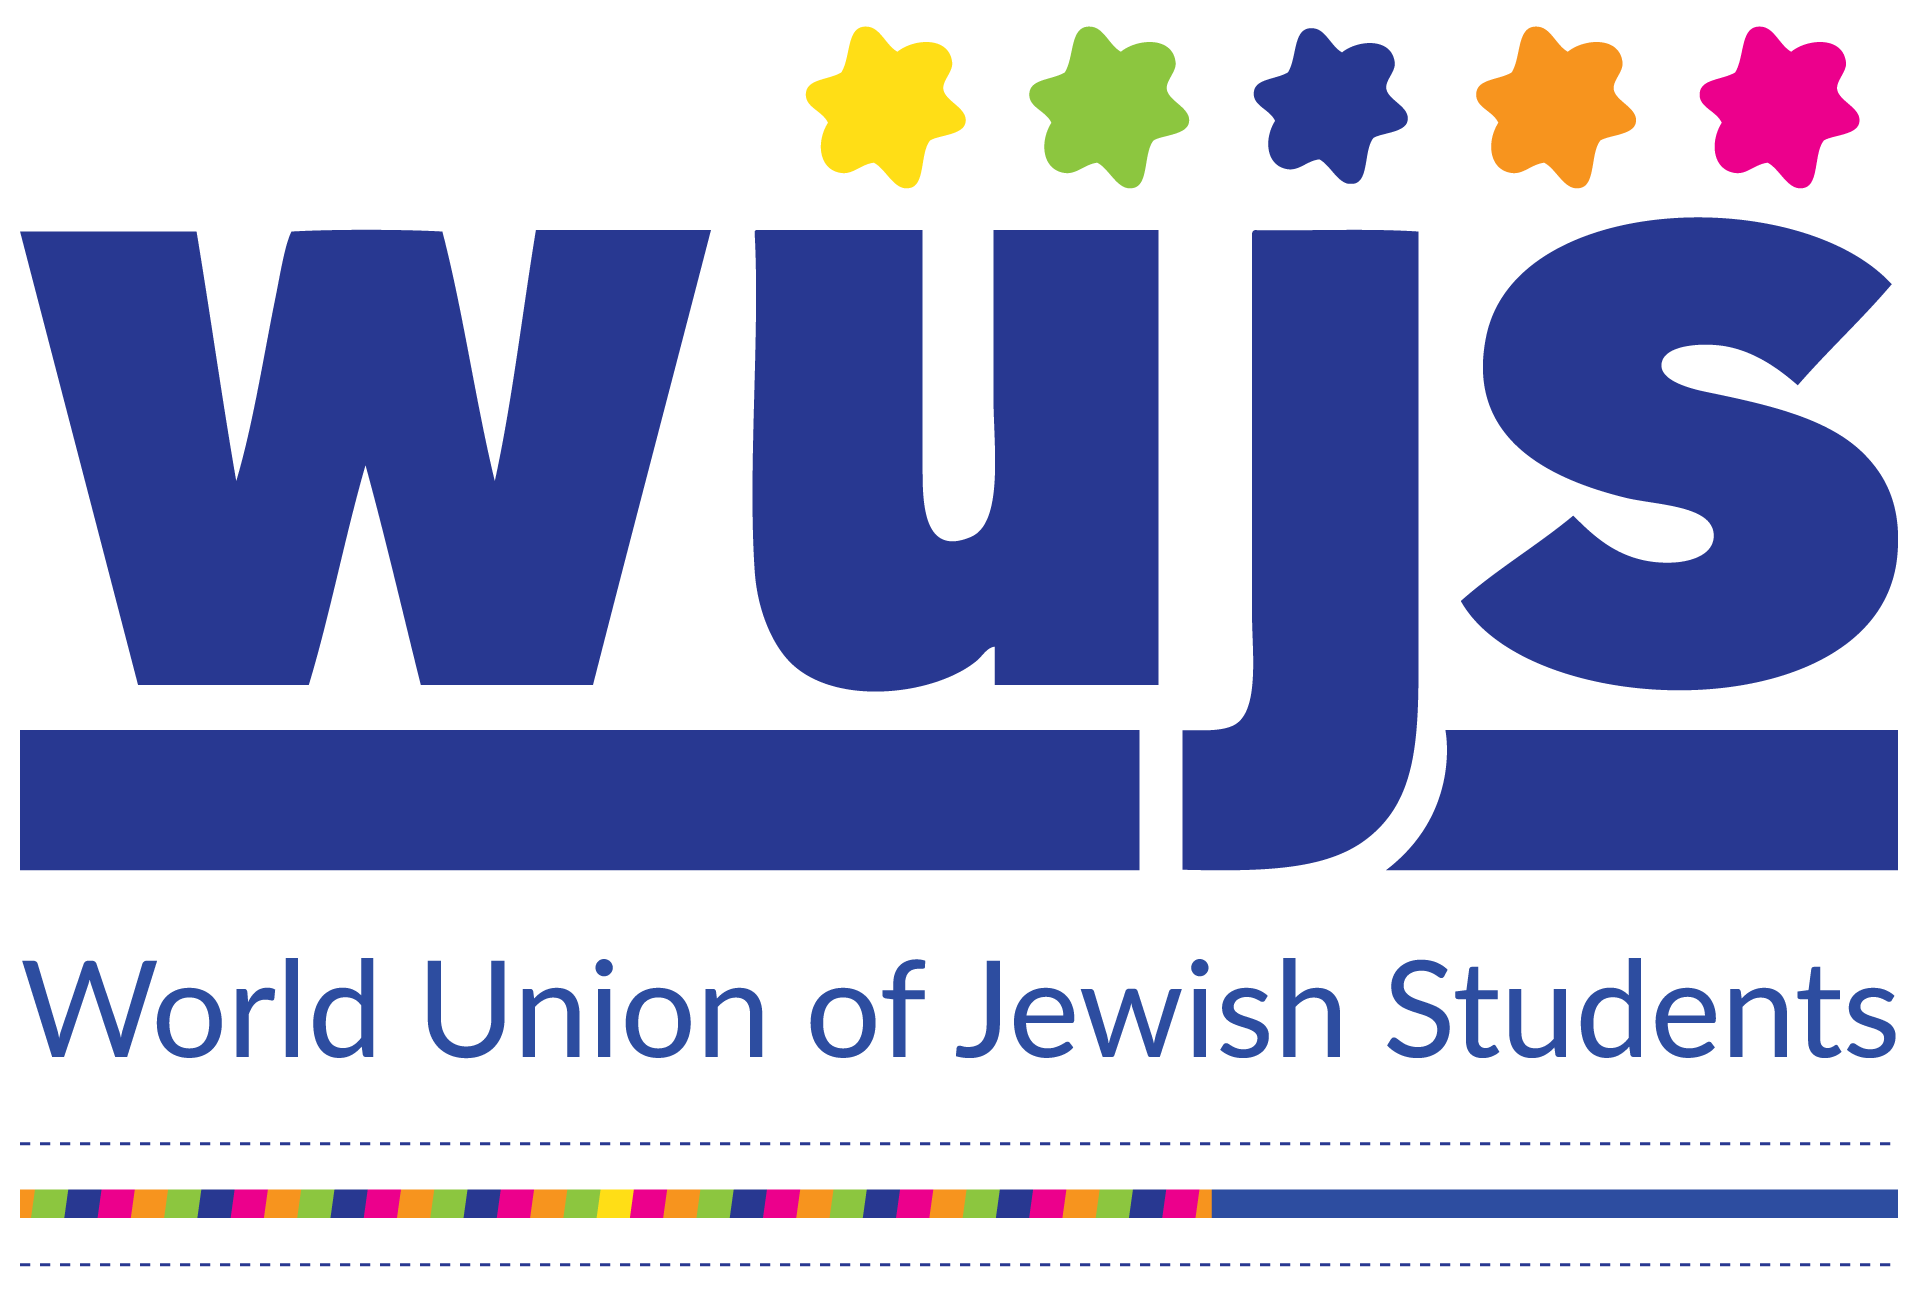 World Union of Jewish Students logo